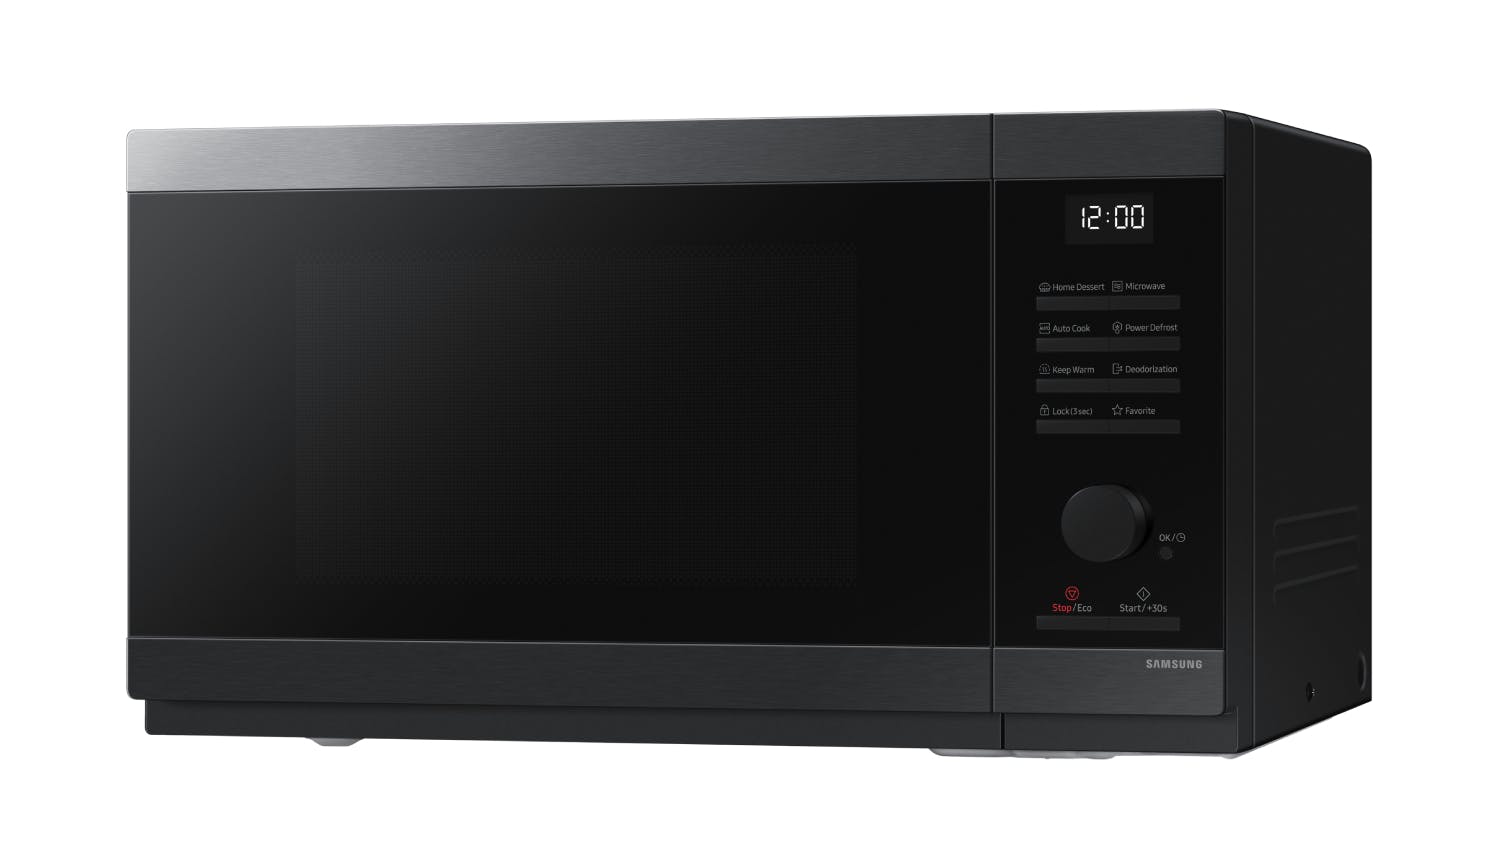 Samsung 32L 1000W Microwave - Black (MS32DG4504AGSA)